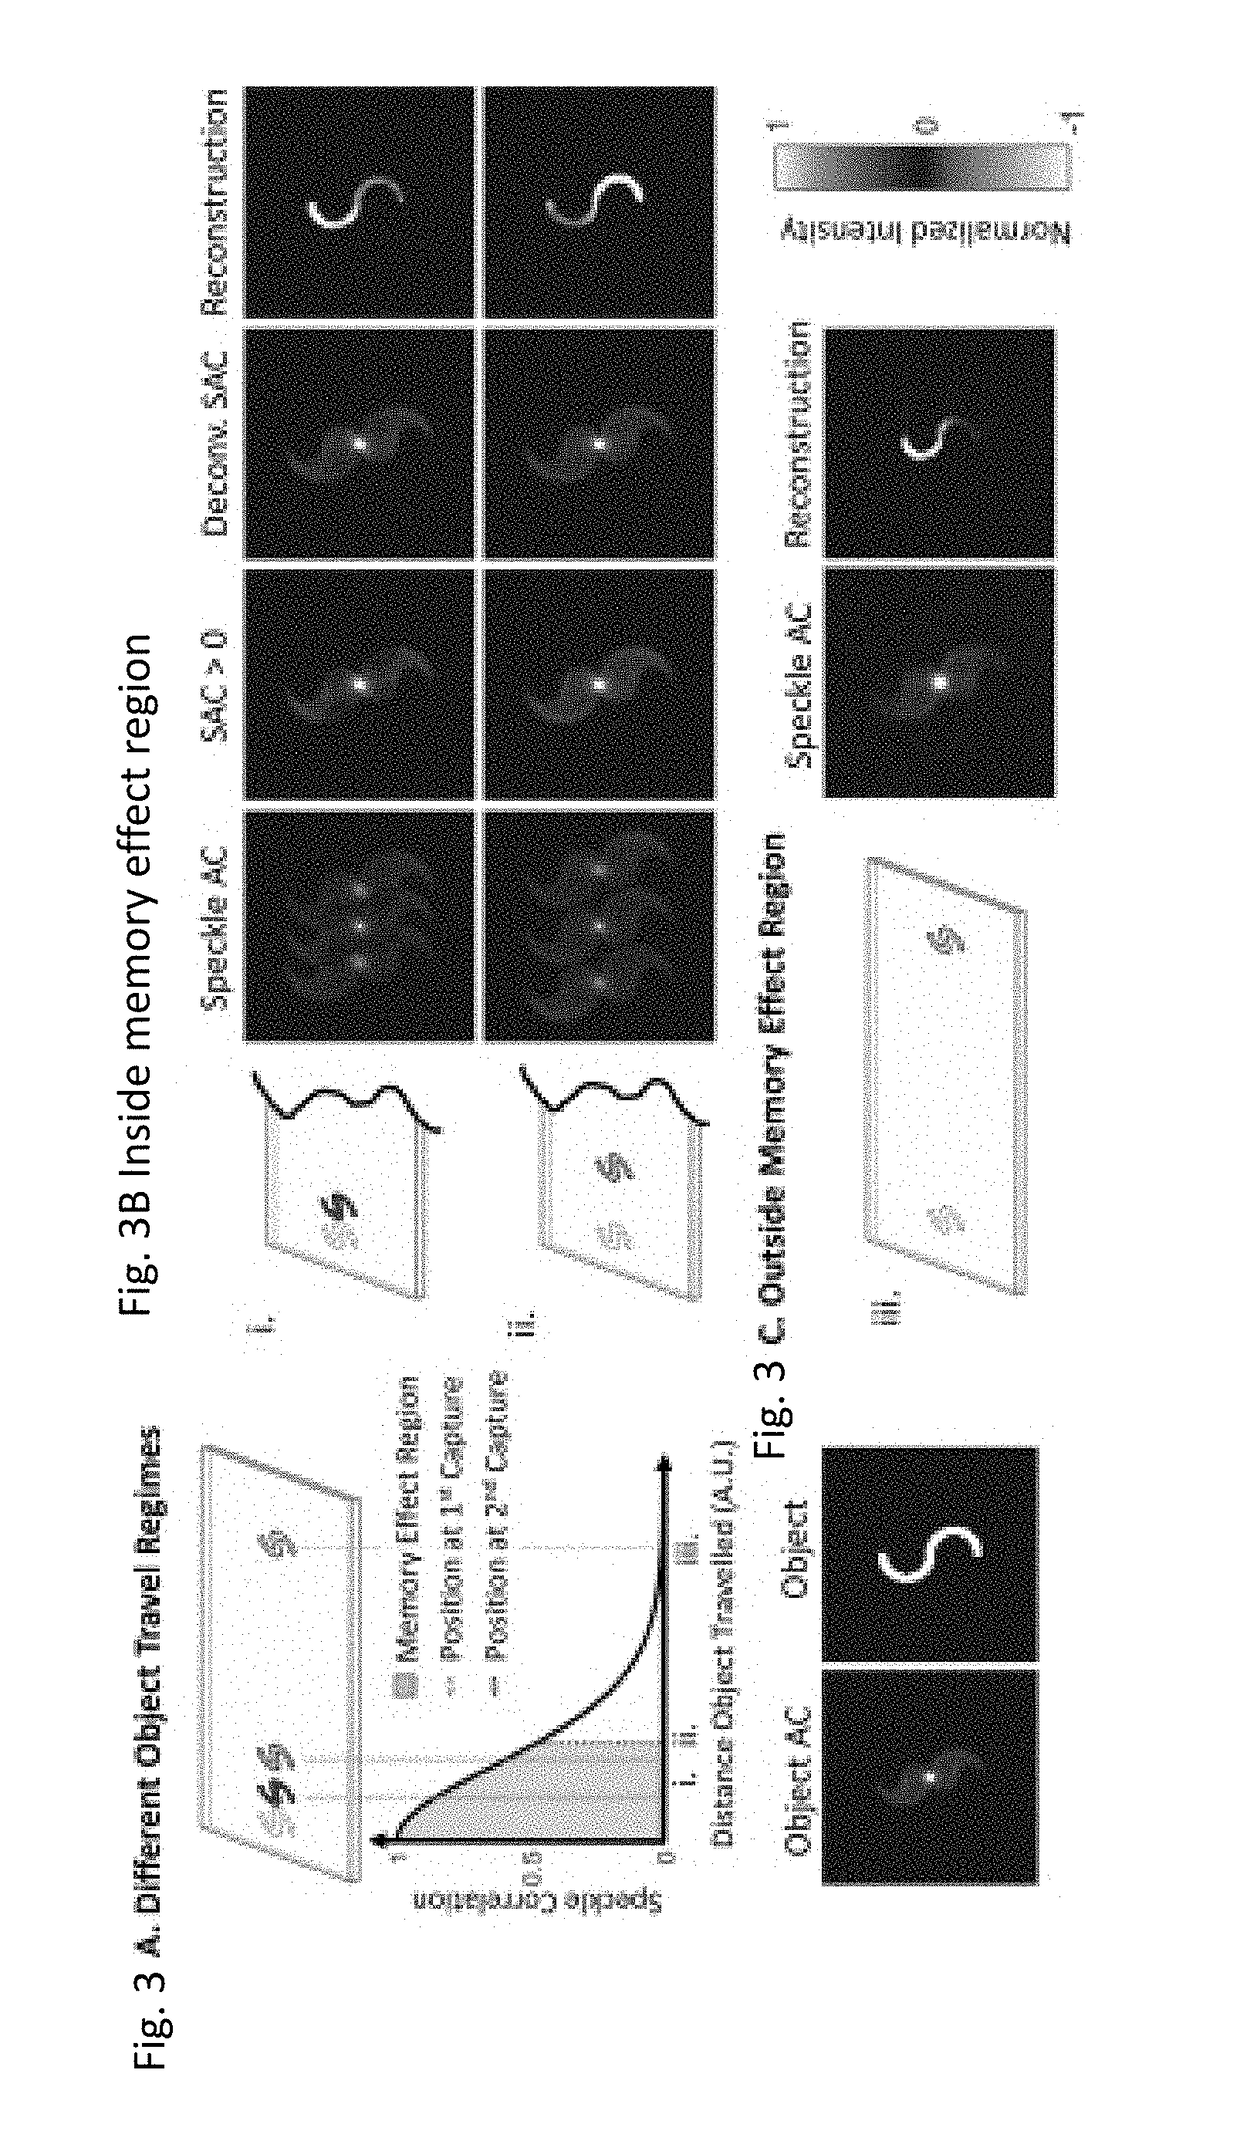 Noninvasive, label-free, in vivo flow cytometry using speckle correlation technique